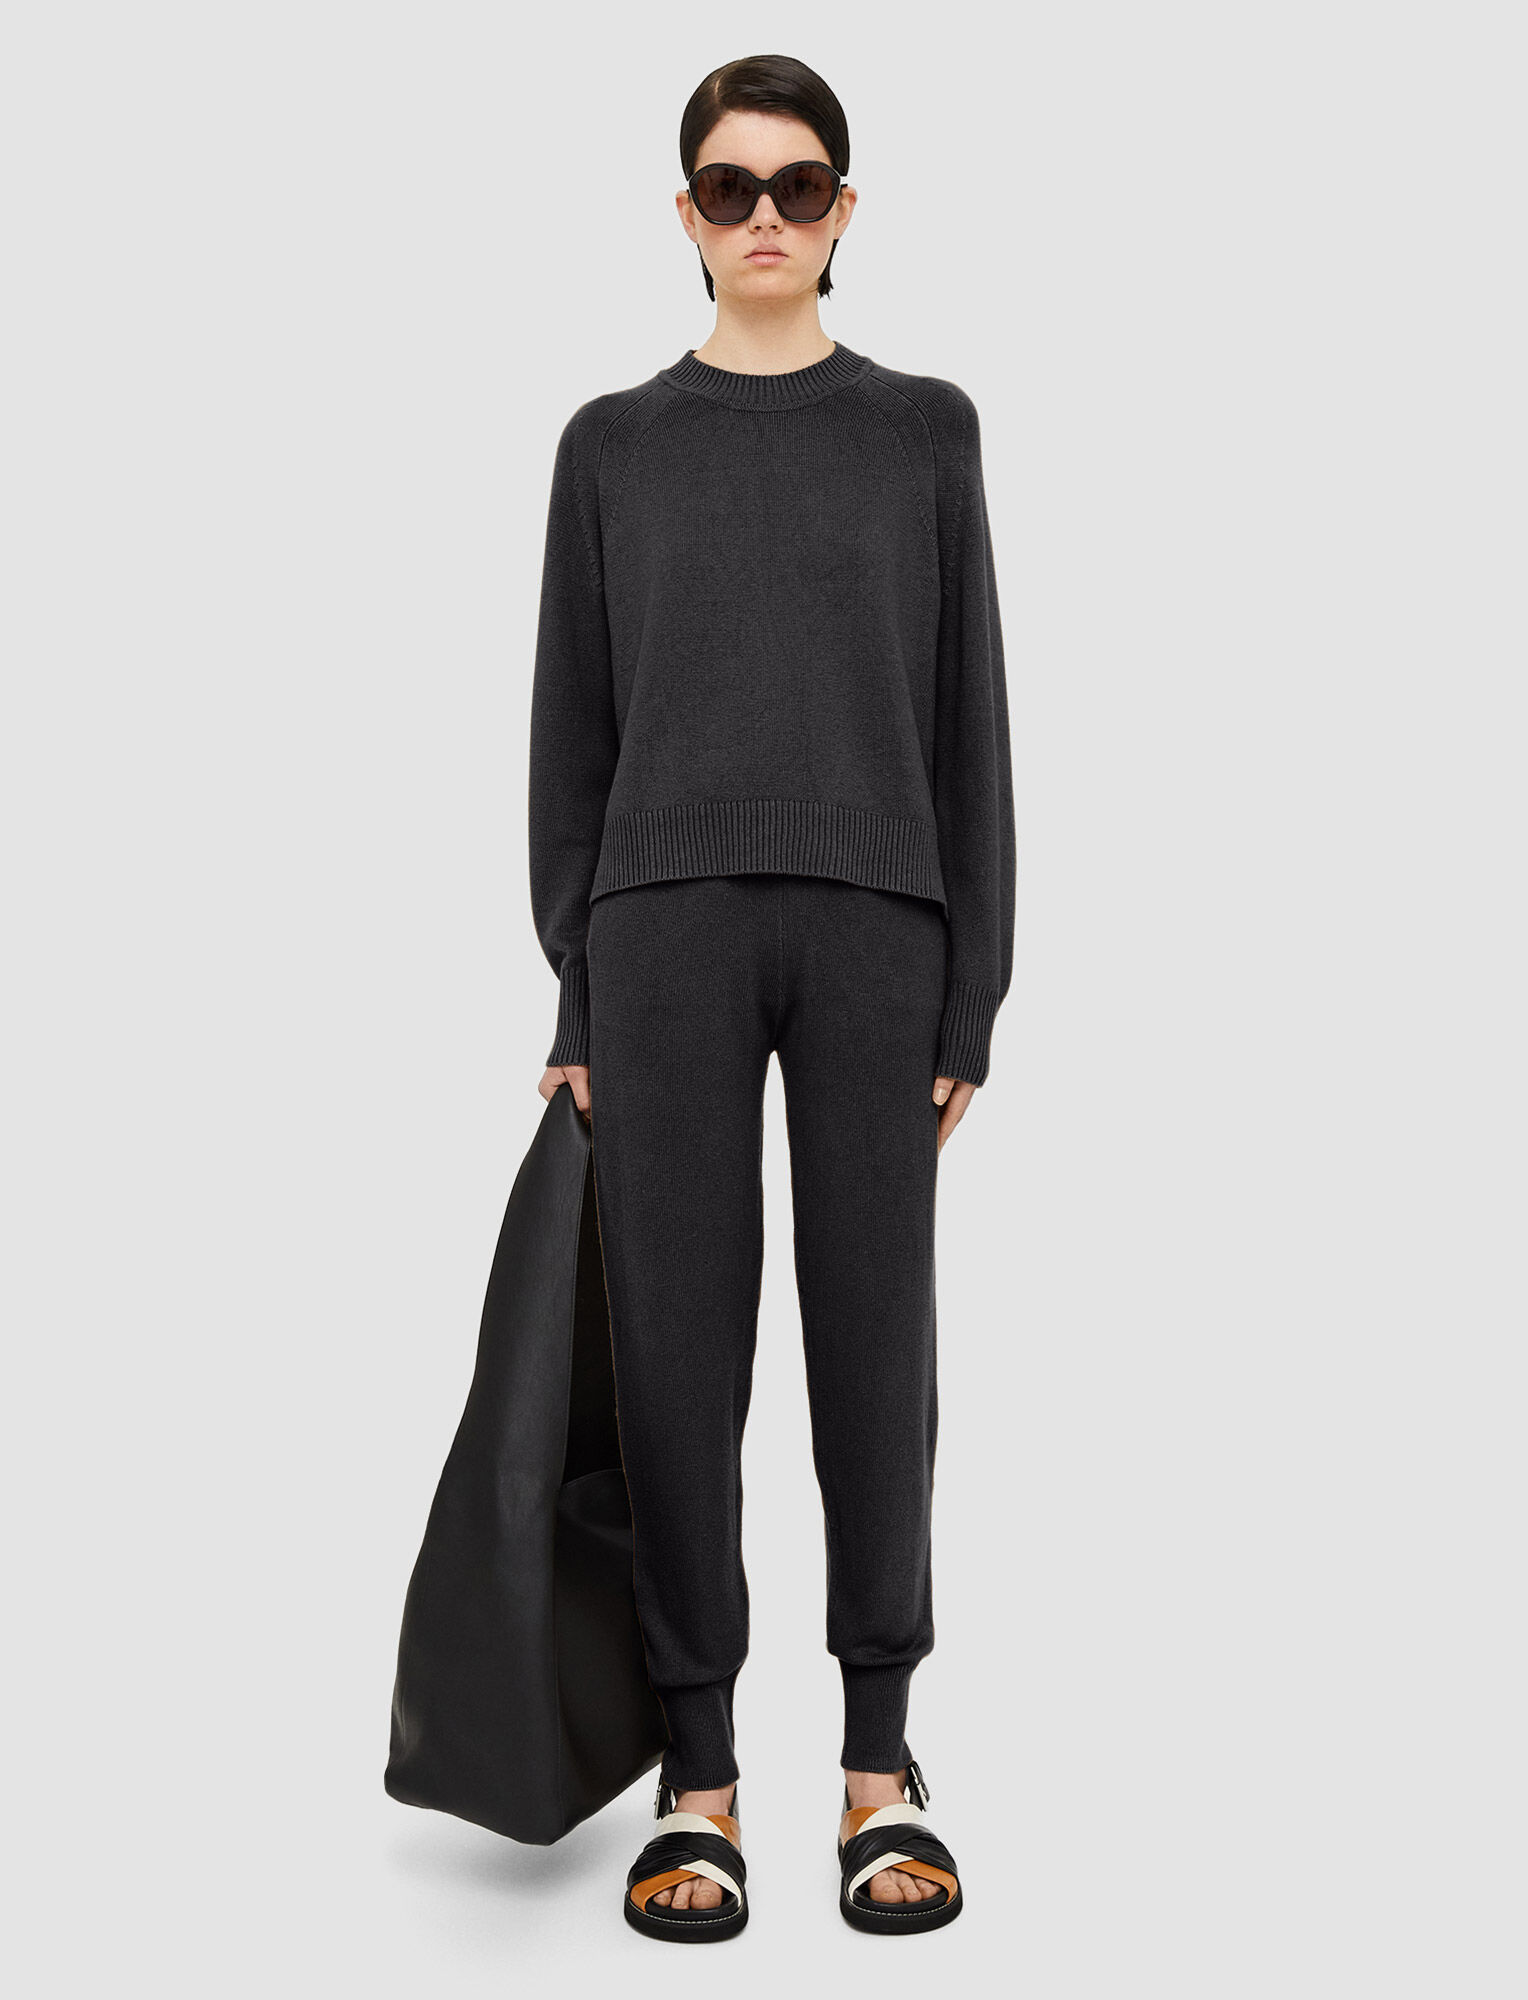 Silk Cashmere Loungewear Jumper in Black